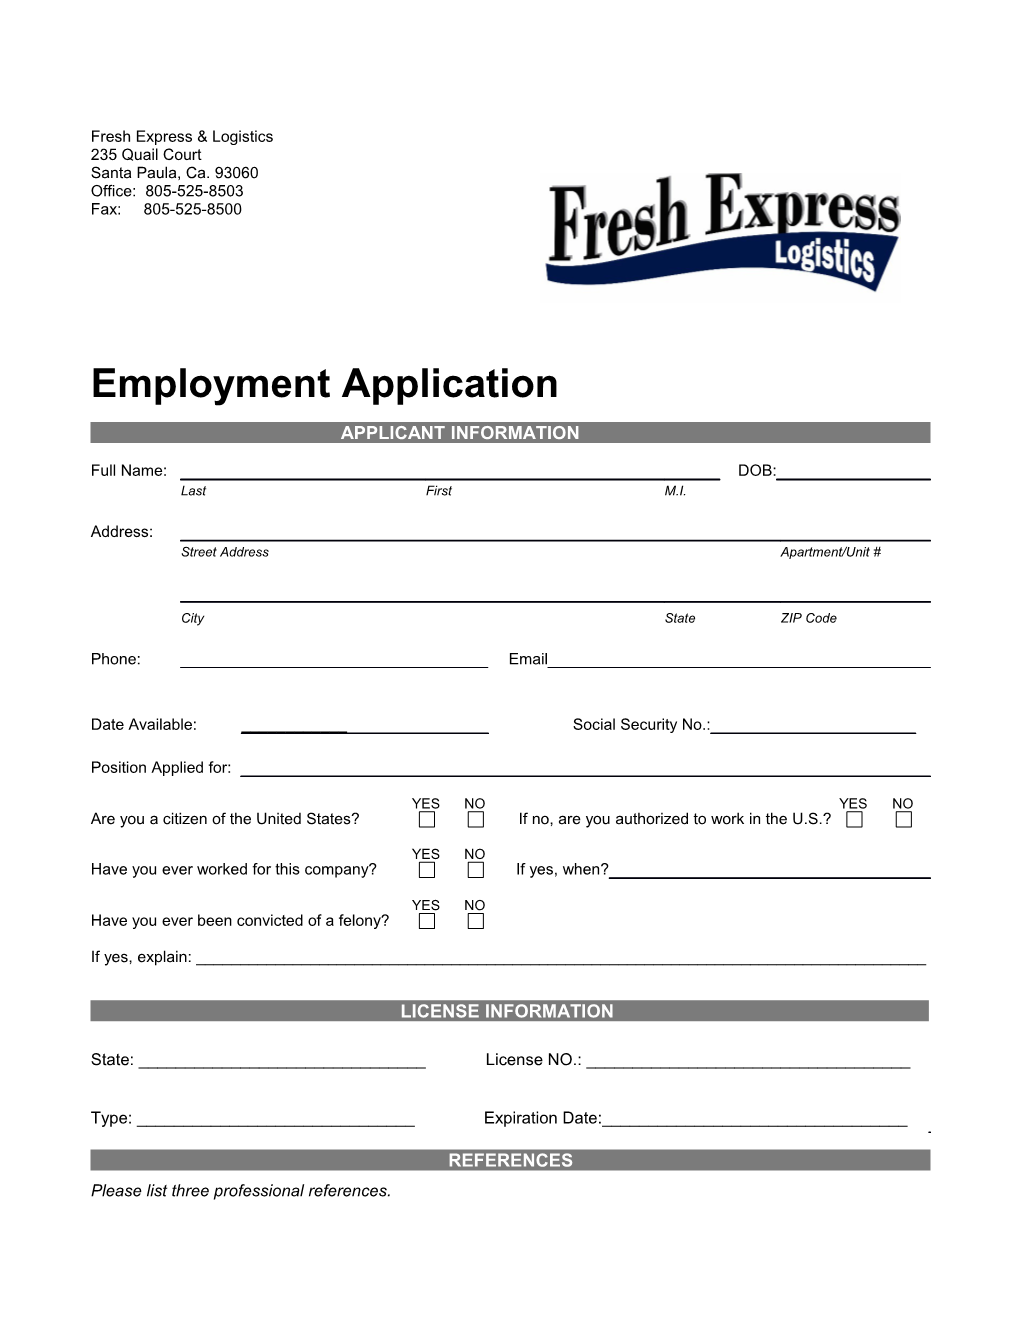 Employment Application s24